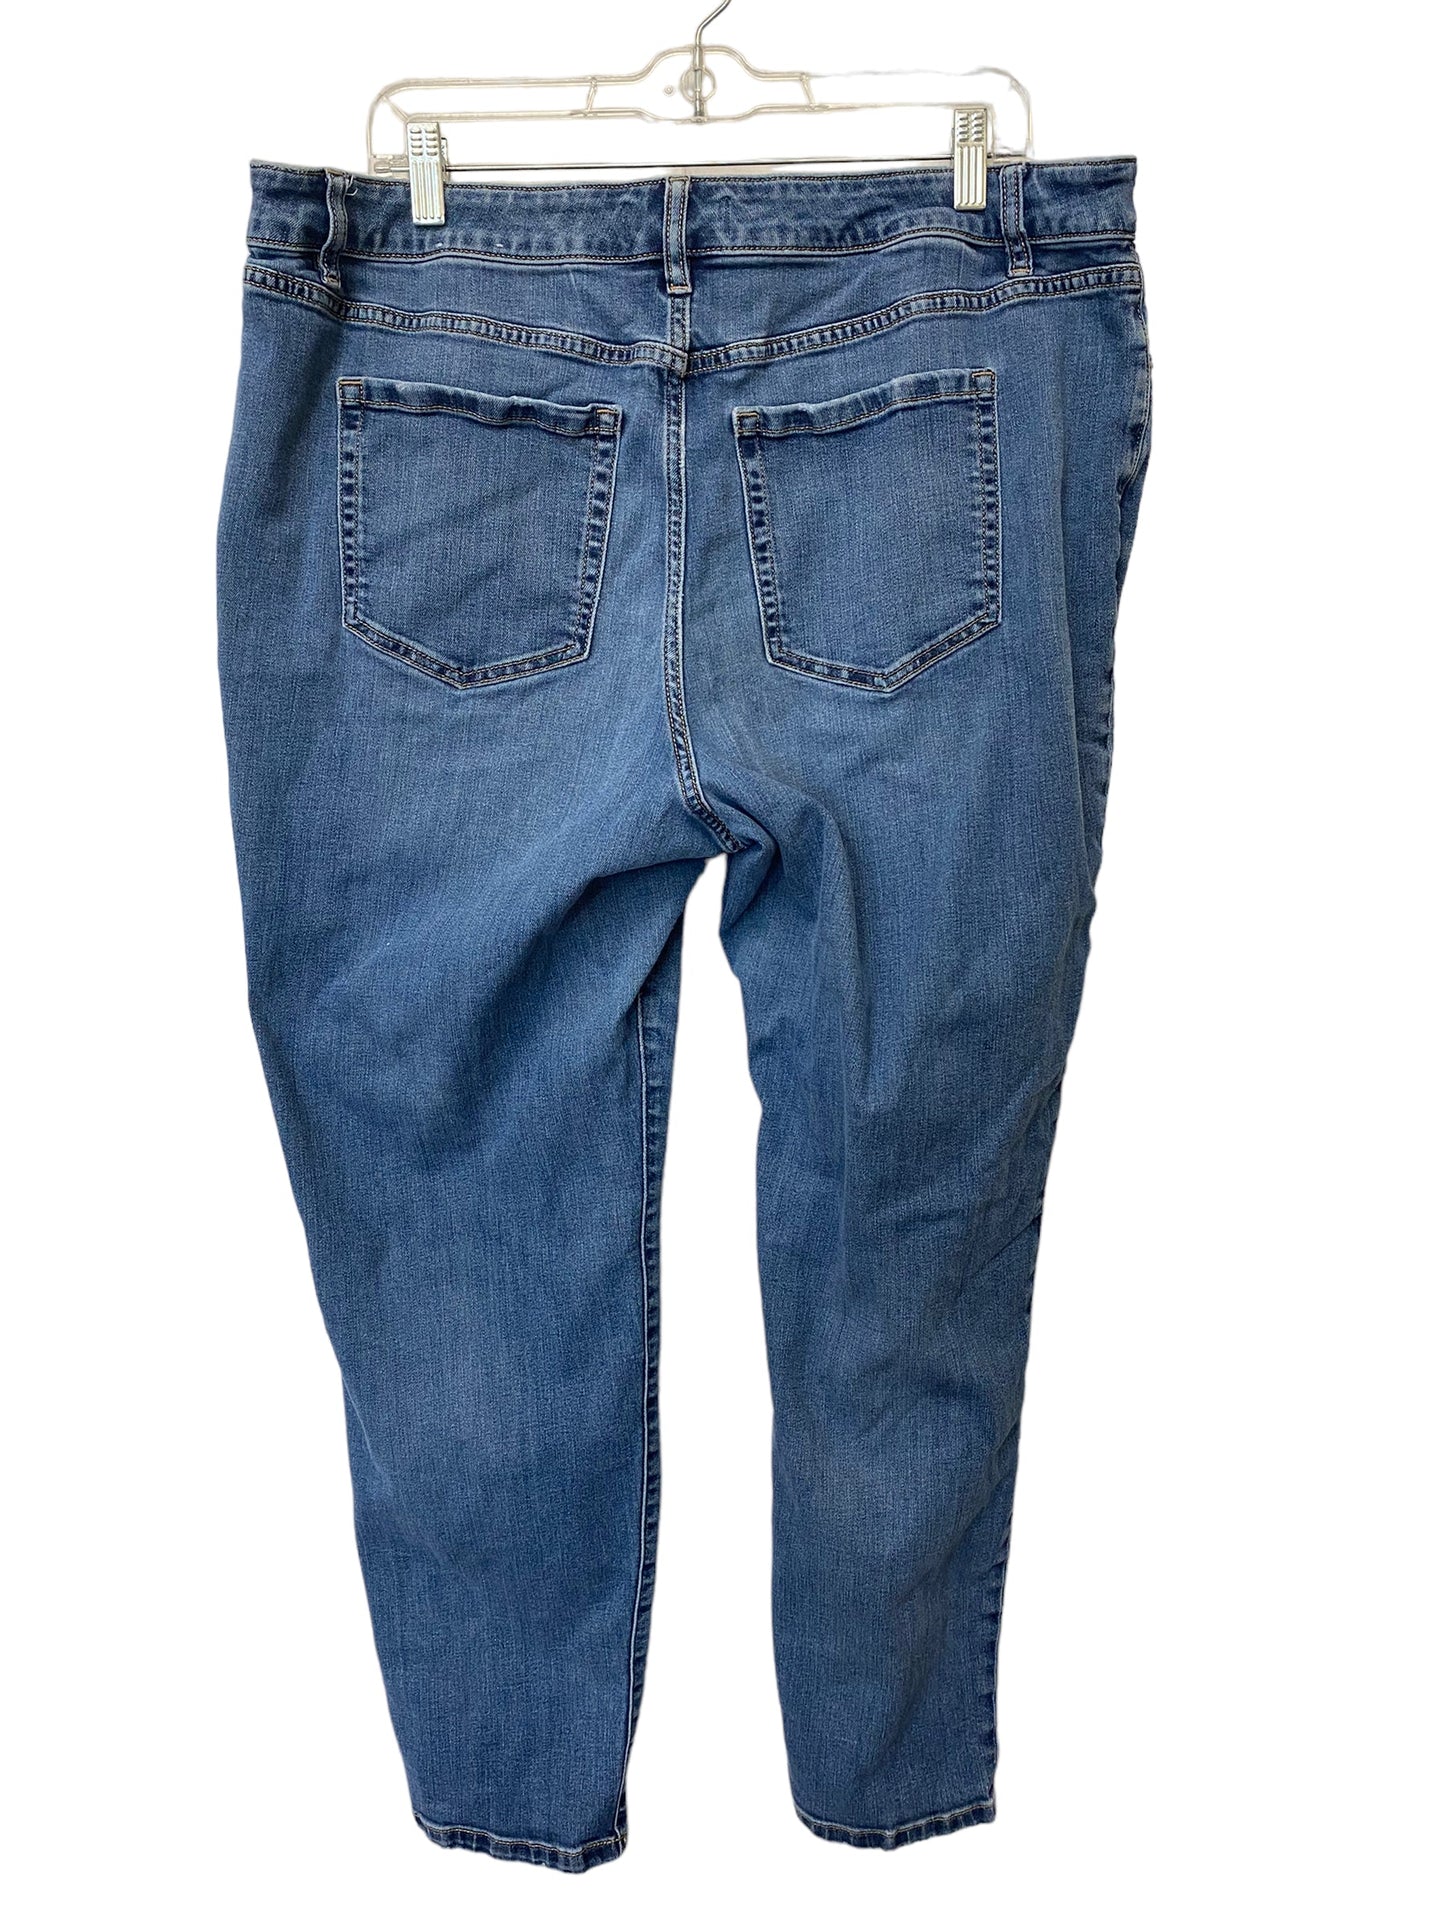 Jeans Skinny By Lane Bryant  Size: 16